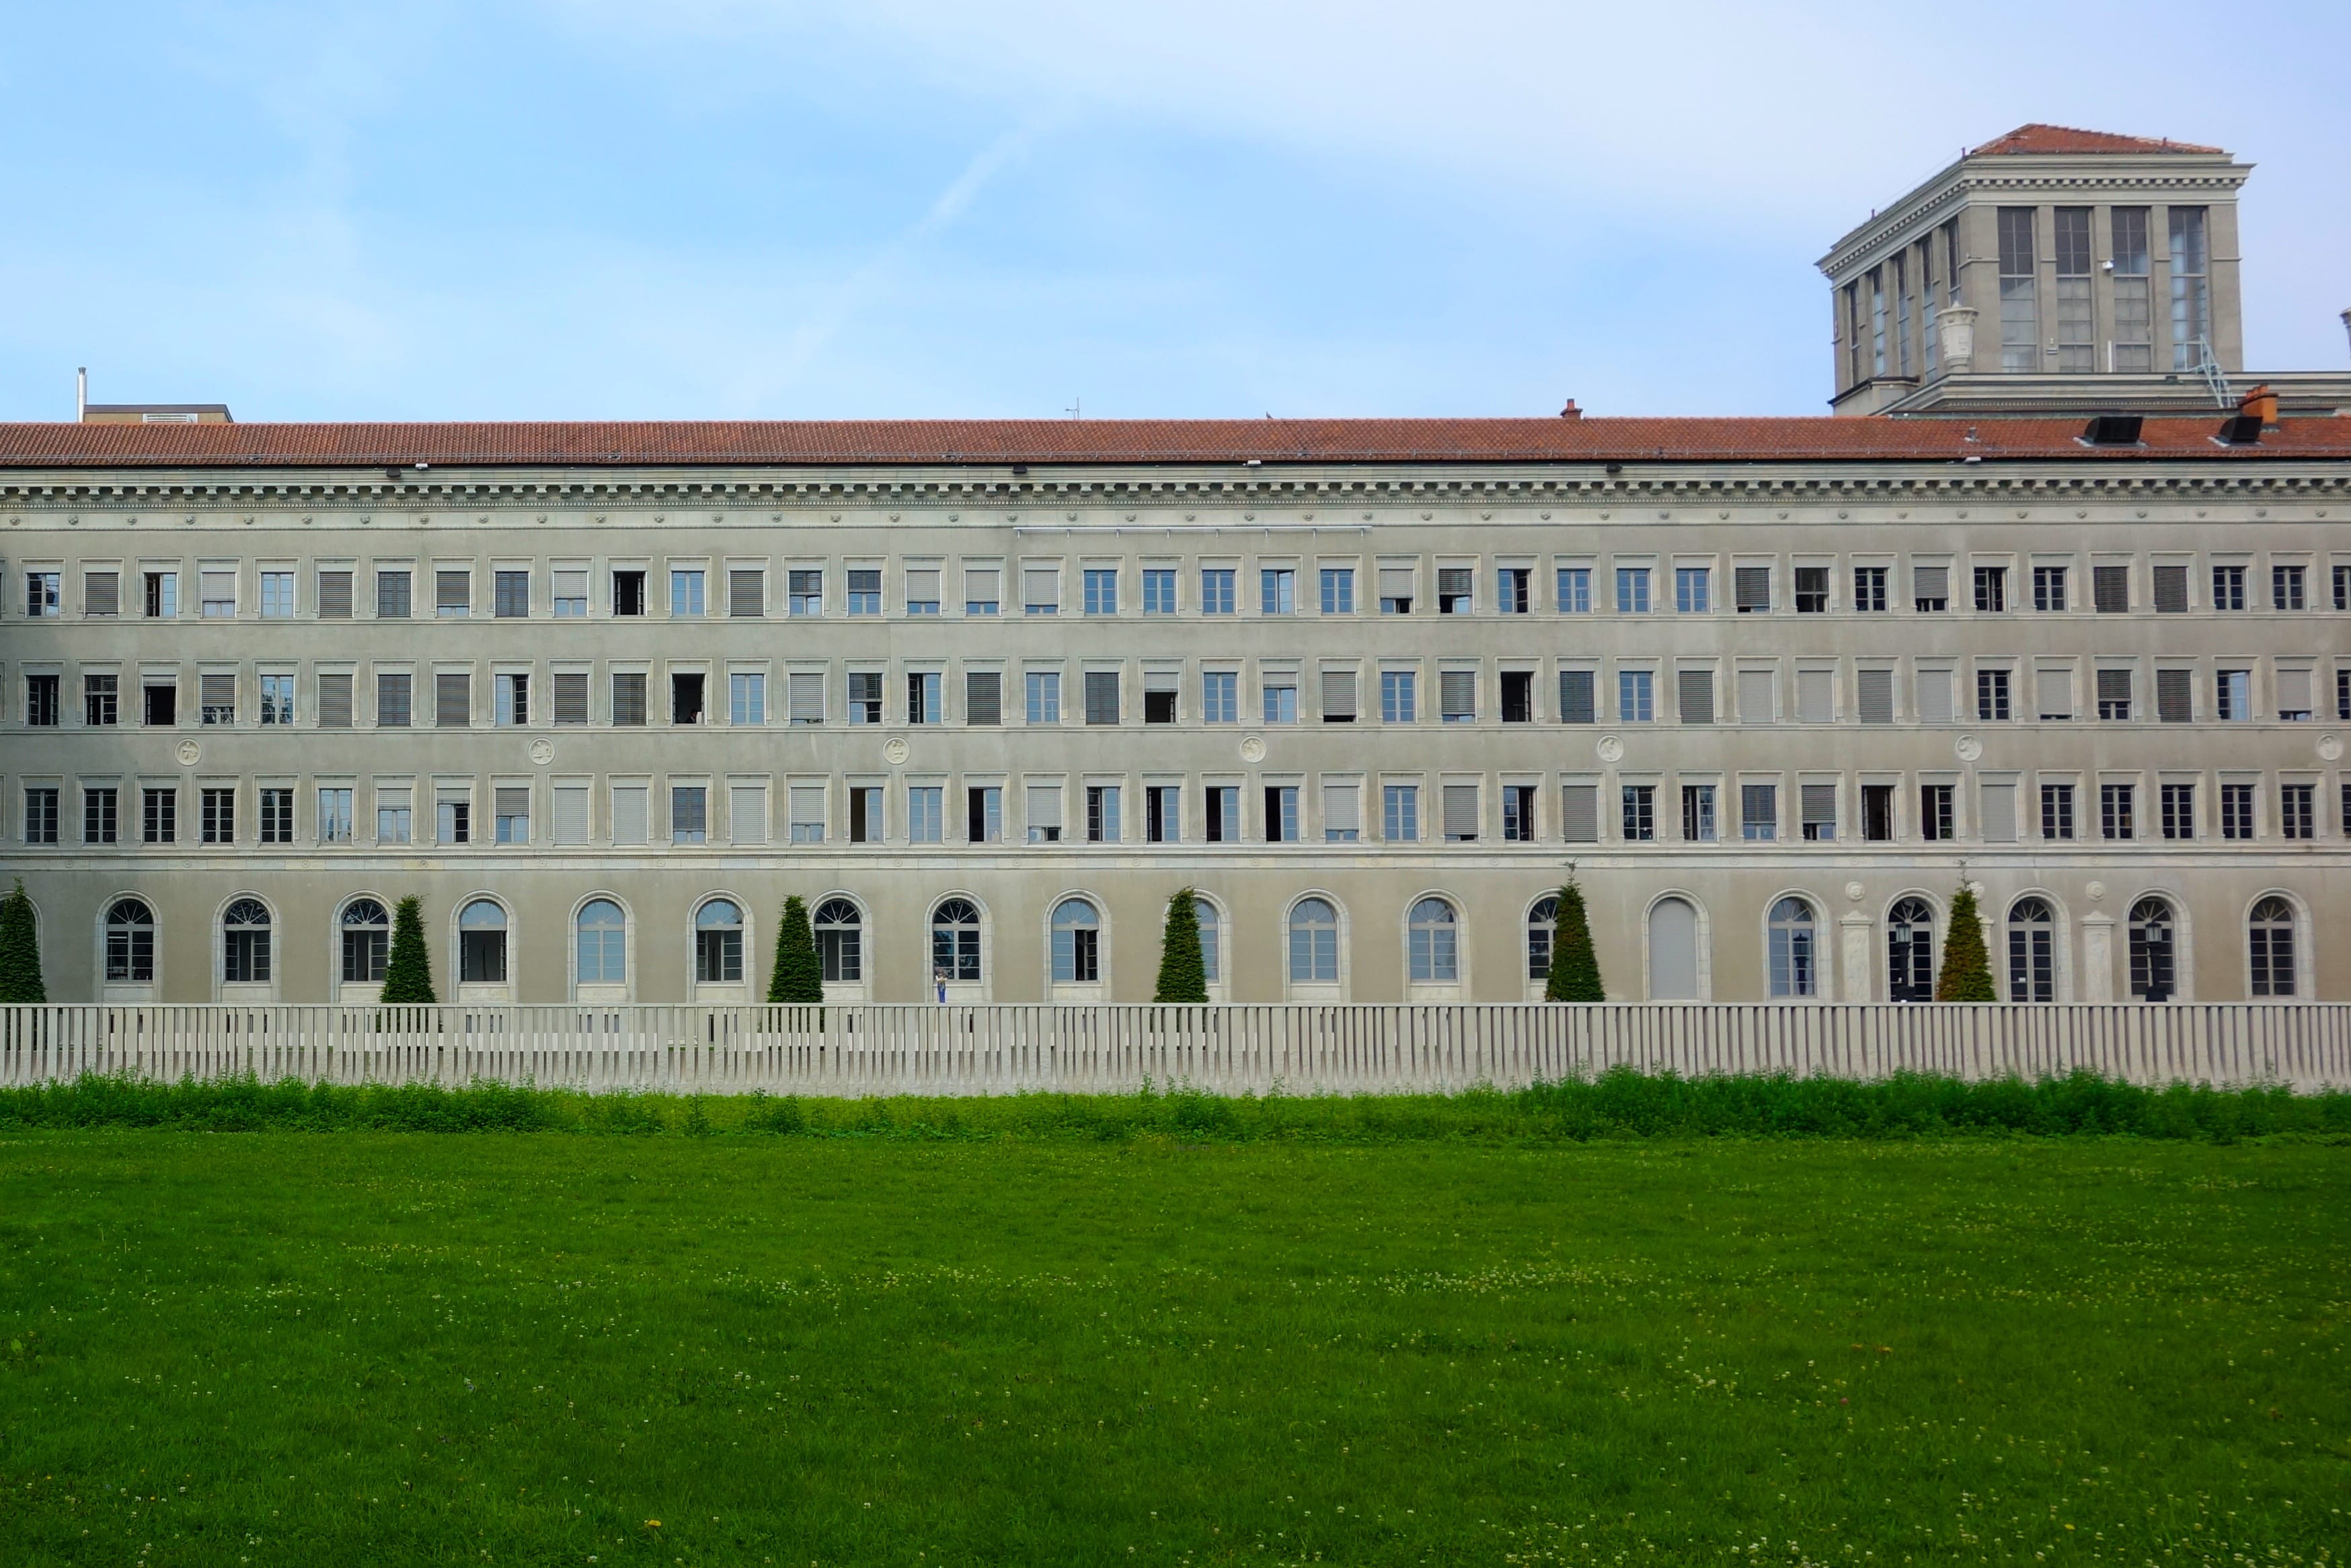 WTO headquarters in Geneva by Nicolas Nova @ flickr.com